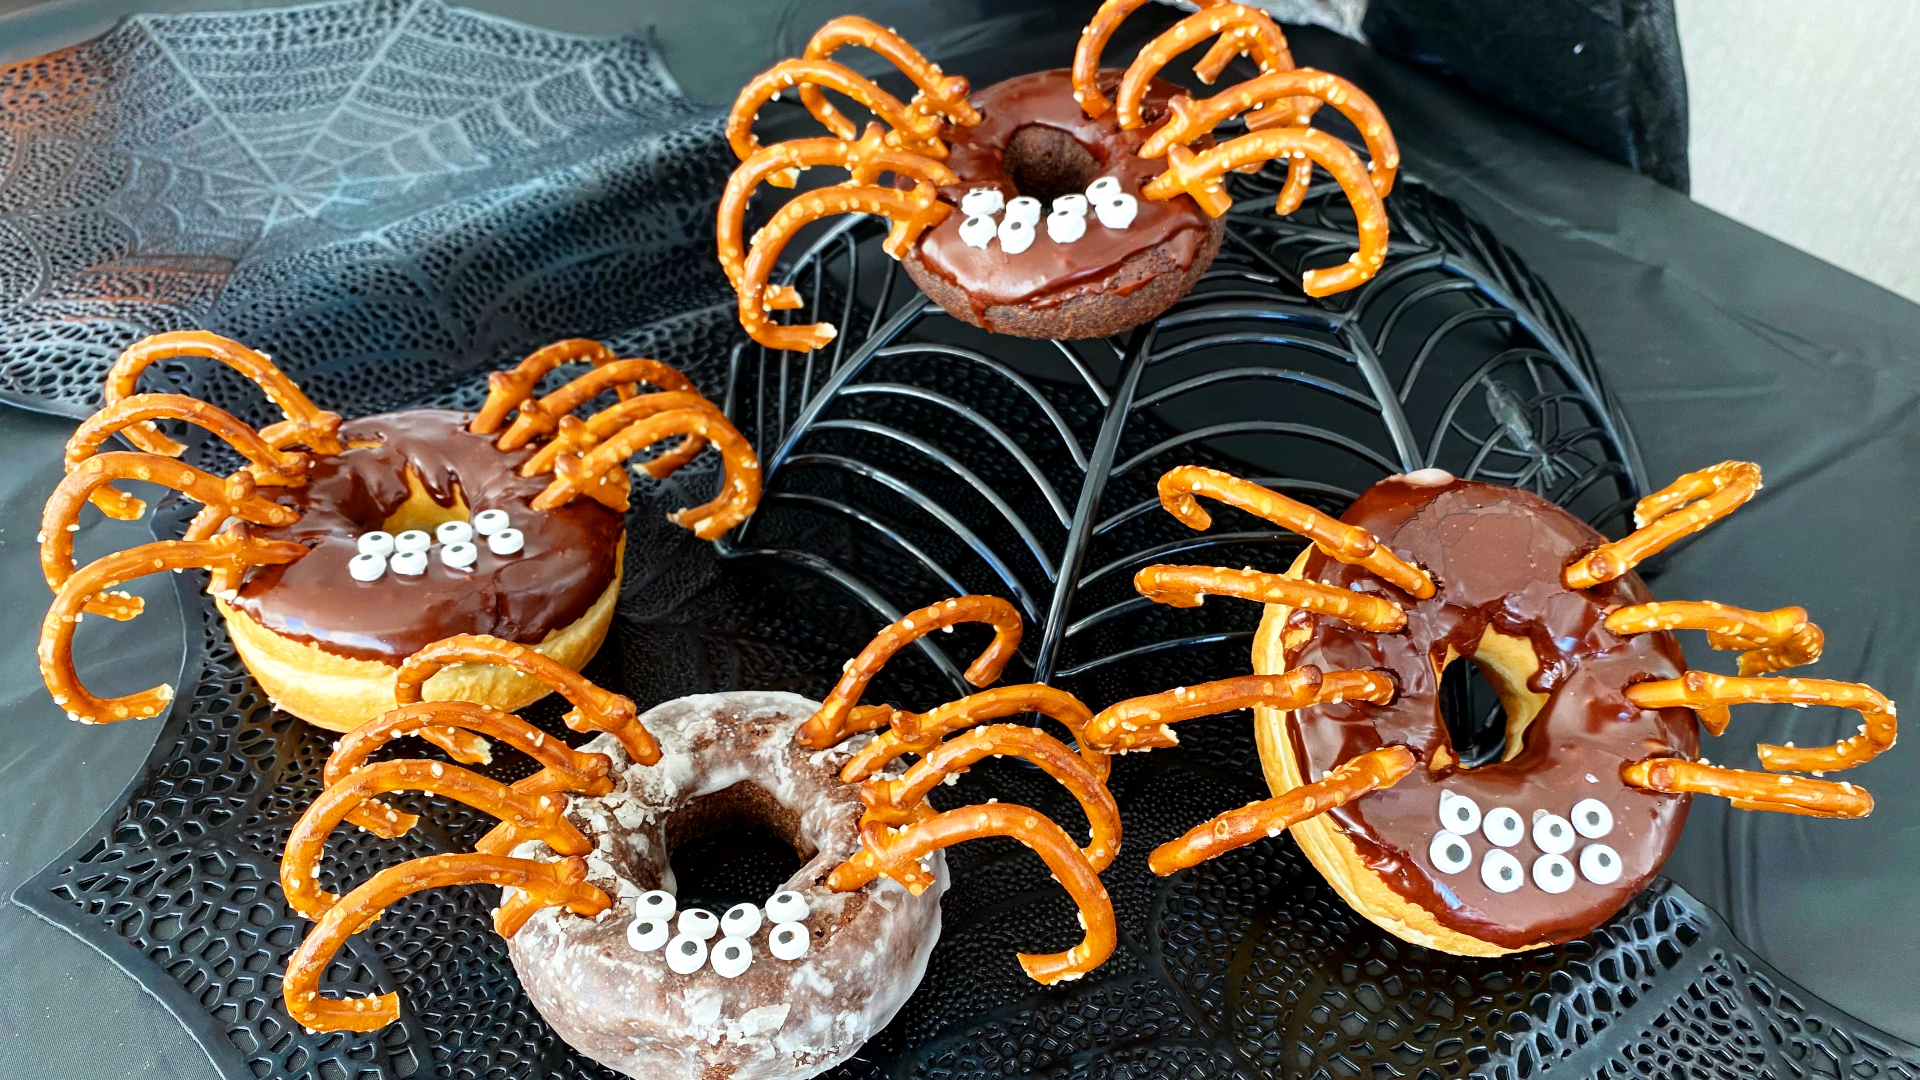 Spider doughnuts